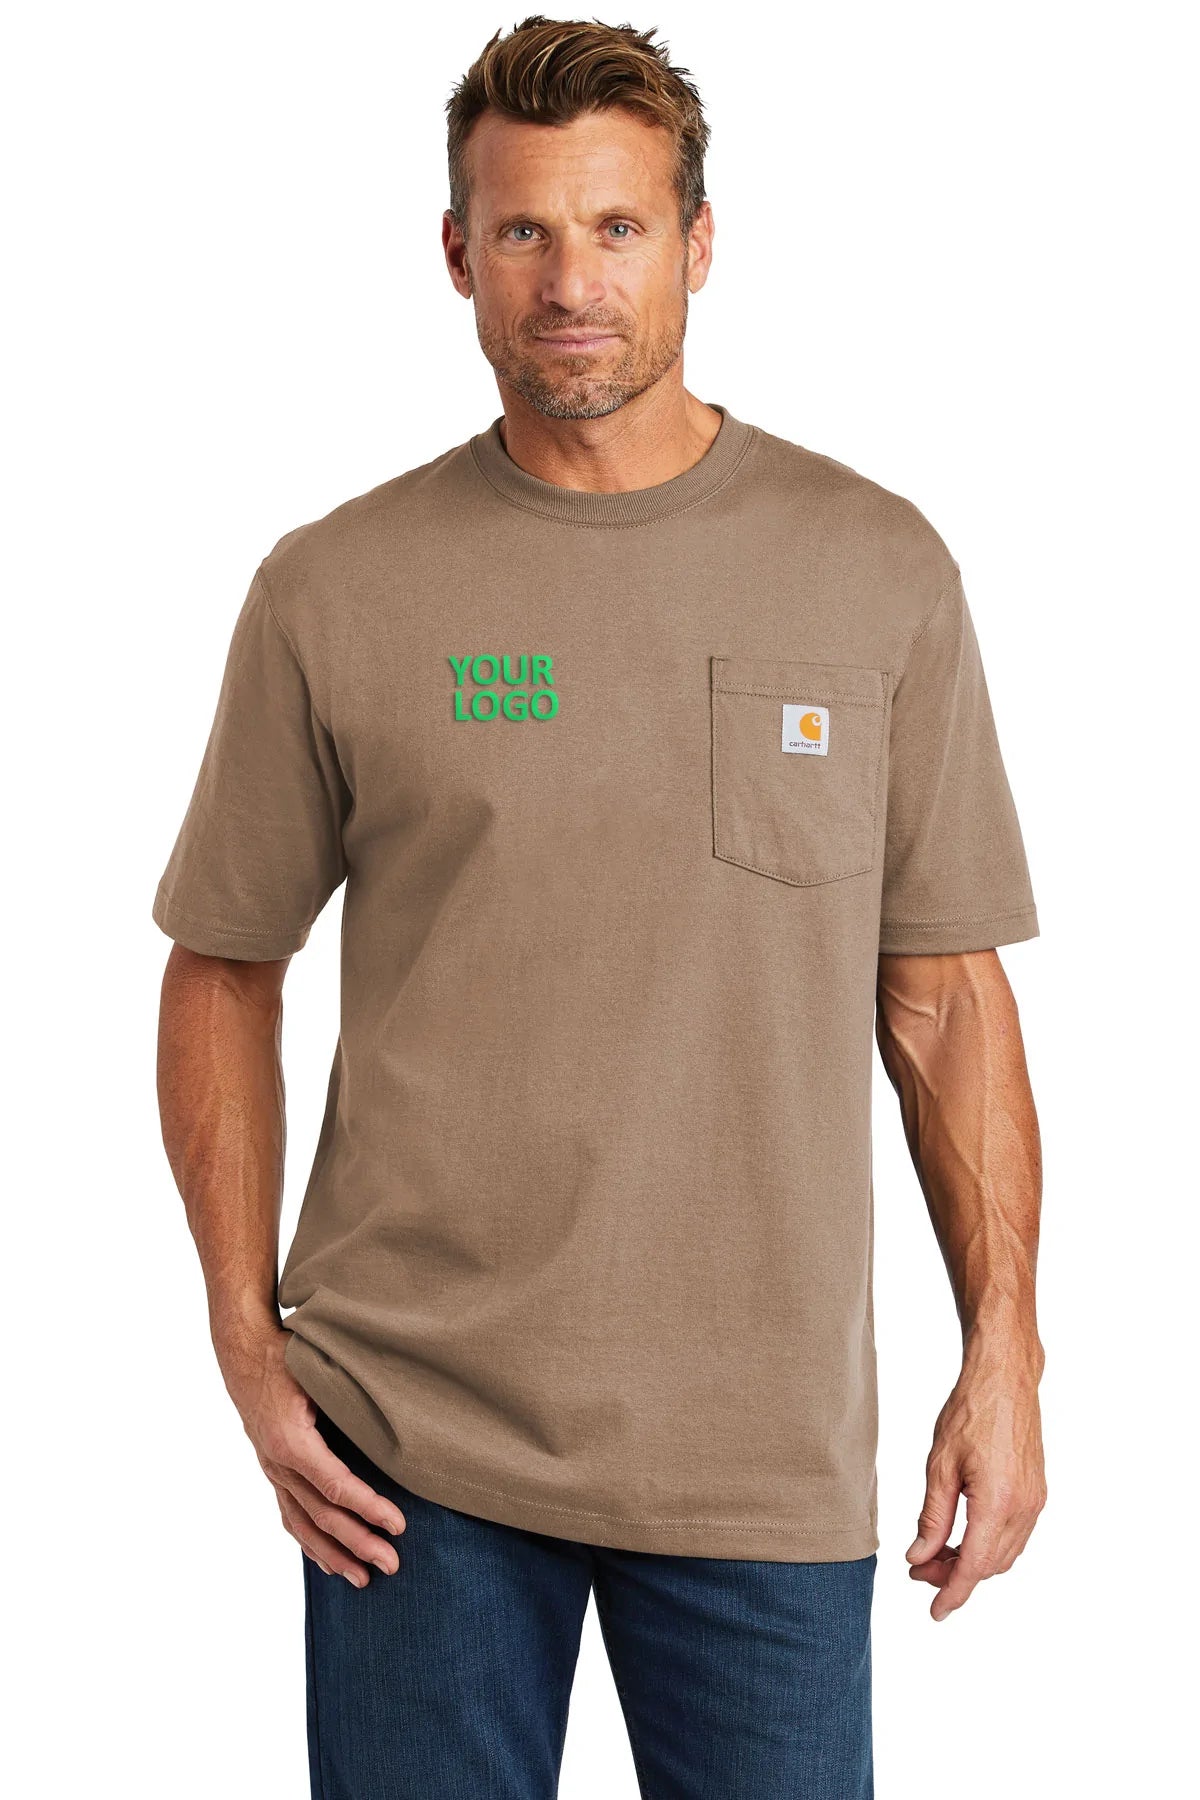 Company Logo Carhartt Workwear Pocket Short Sleeve T-Shirt CTK87 Desert